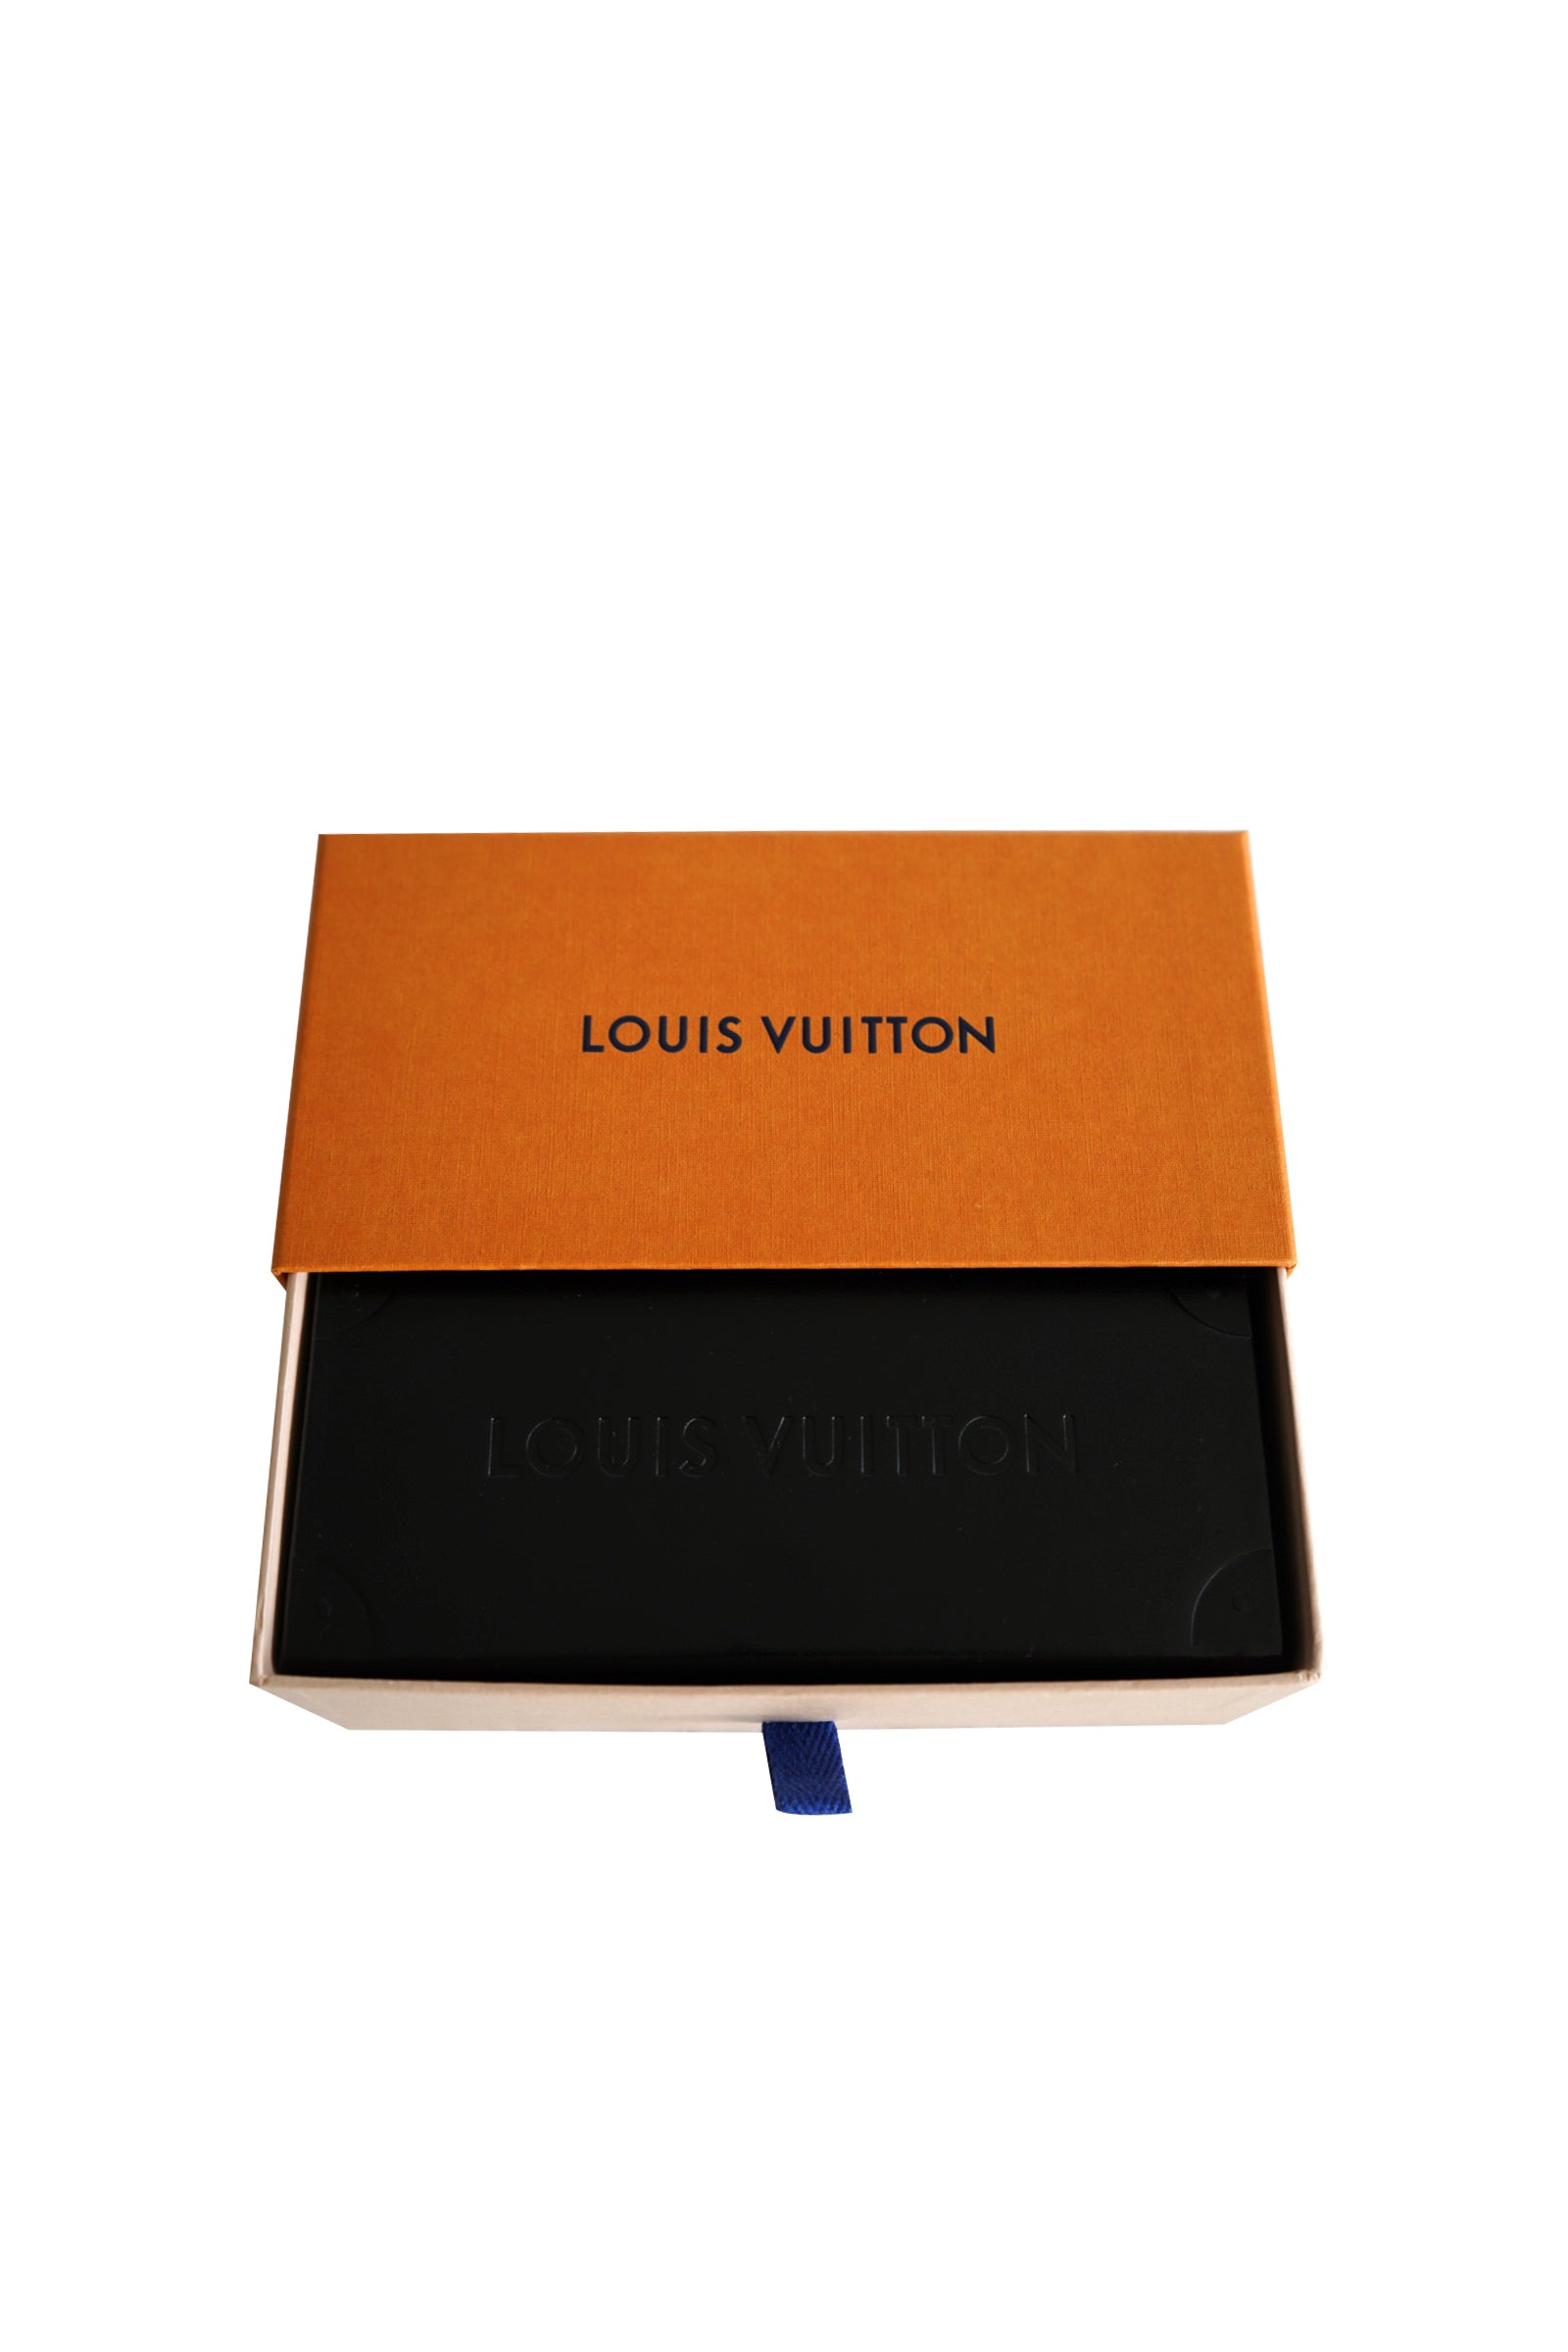 Louis Vuitton SKEPTICALS SUNGLASSES – Swaggys Closet